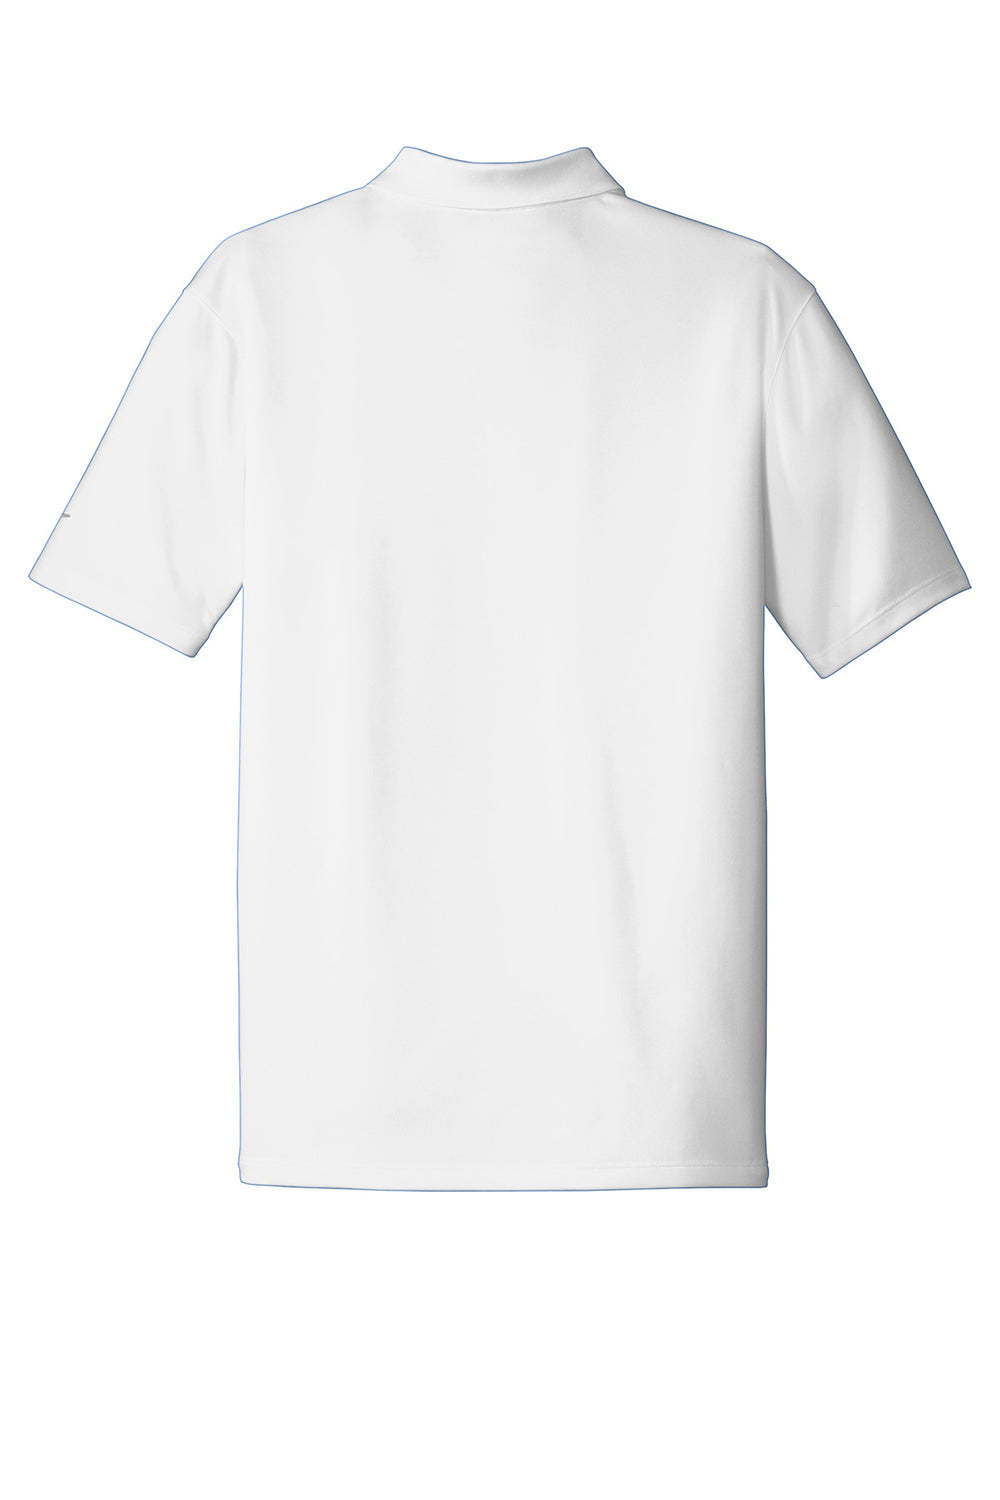 Nike 838956 Mens Players Dri-Fit Moisture Wicking Short Sleeve Polo Shirt White Flat Back